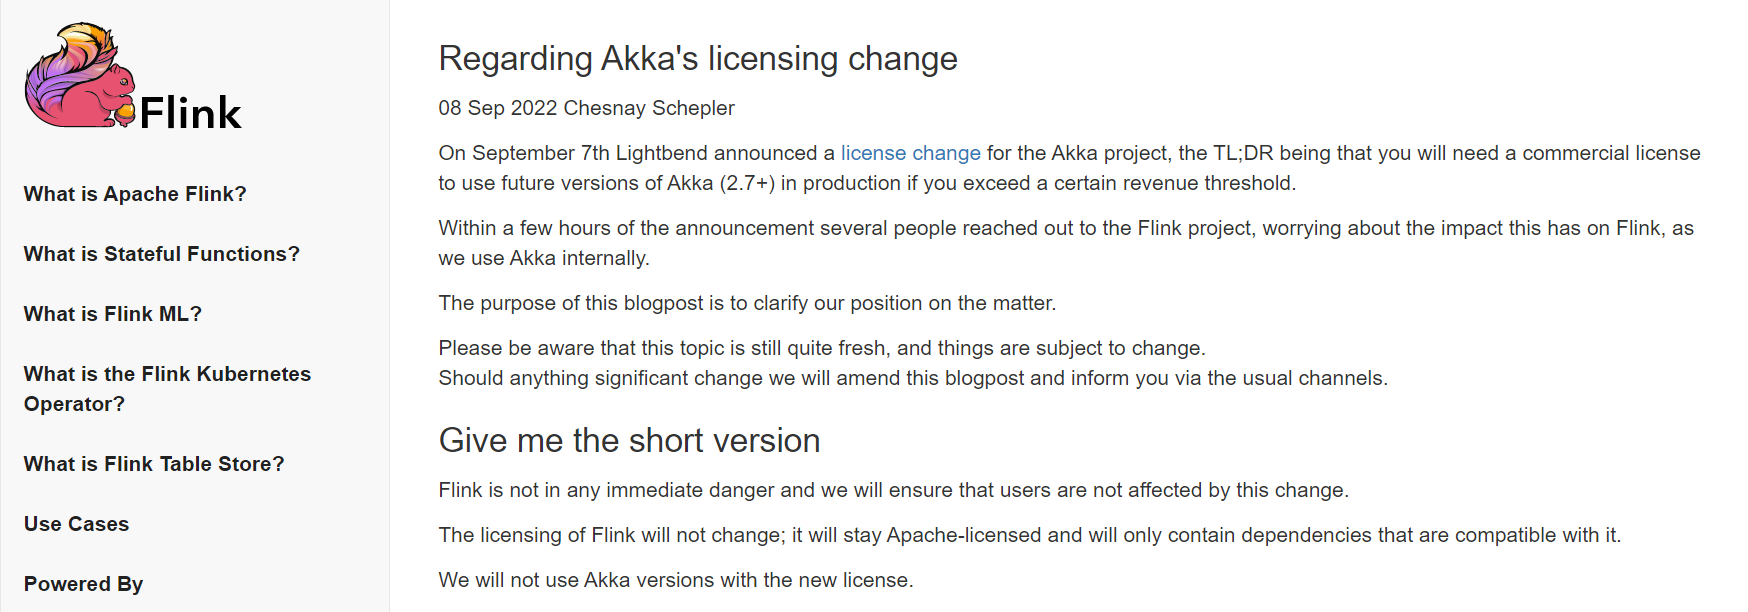 Apache Flink 关于 Akka 许可变更的声明